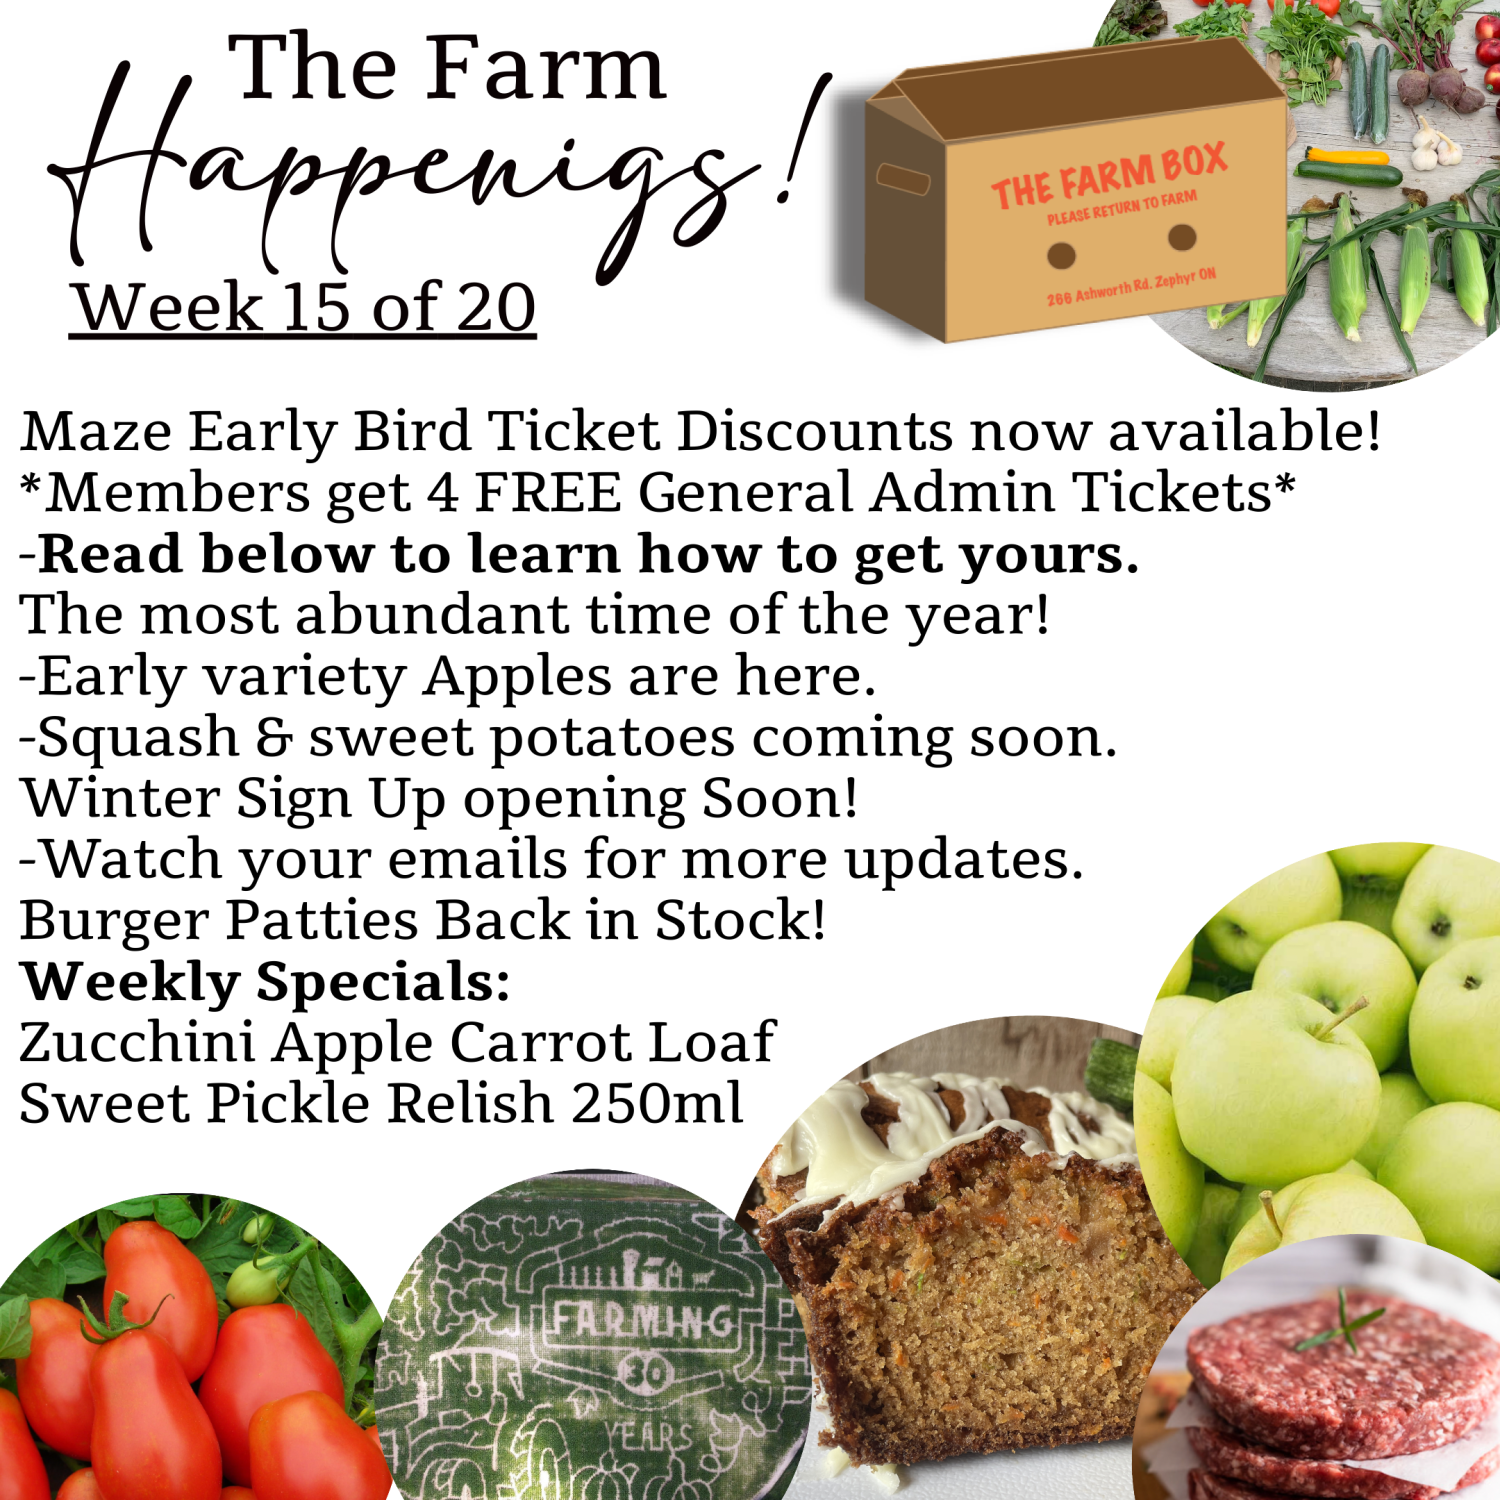 Previous Happening: "The Farm Box"-Coopers CSA Farm Farm Happenings Week 15